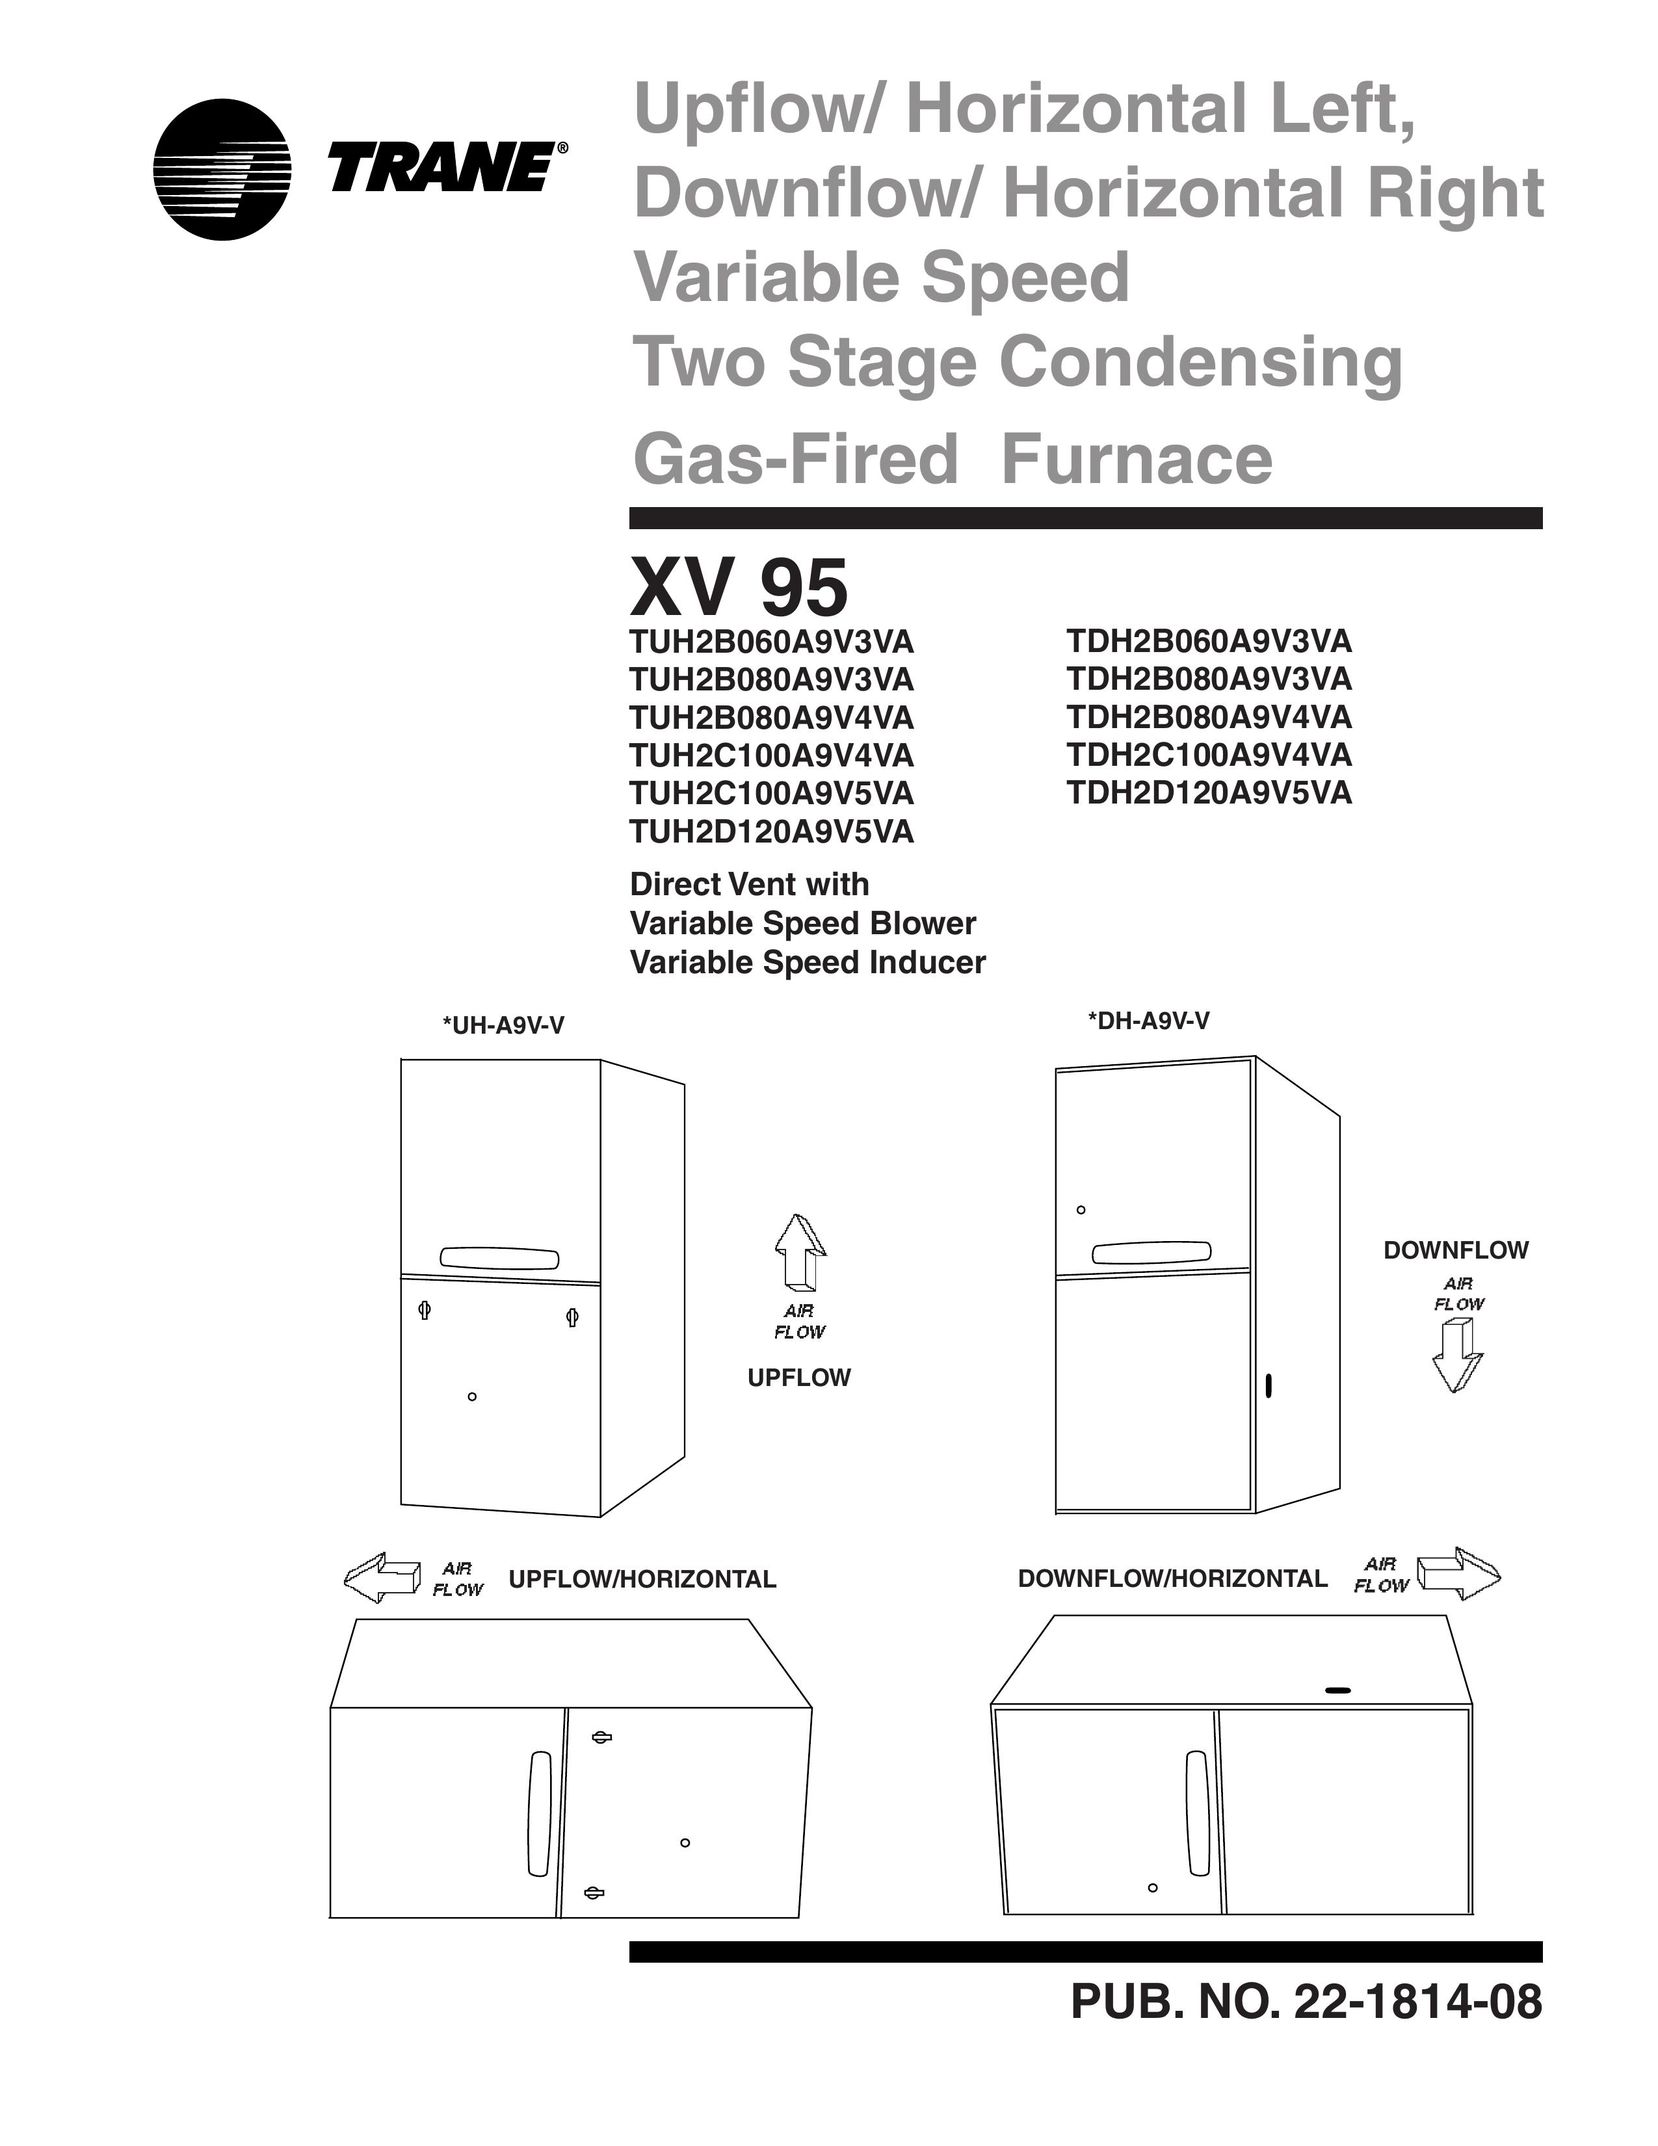 Trane TDH2D120A9V5VA Furnace User Manual